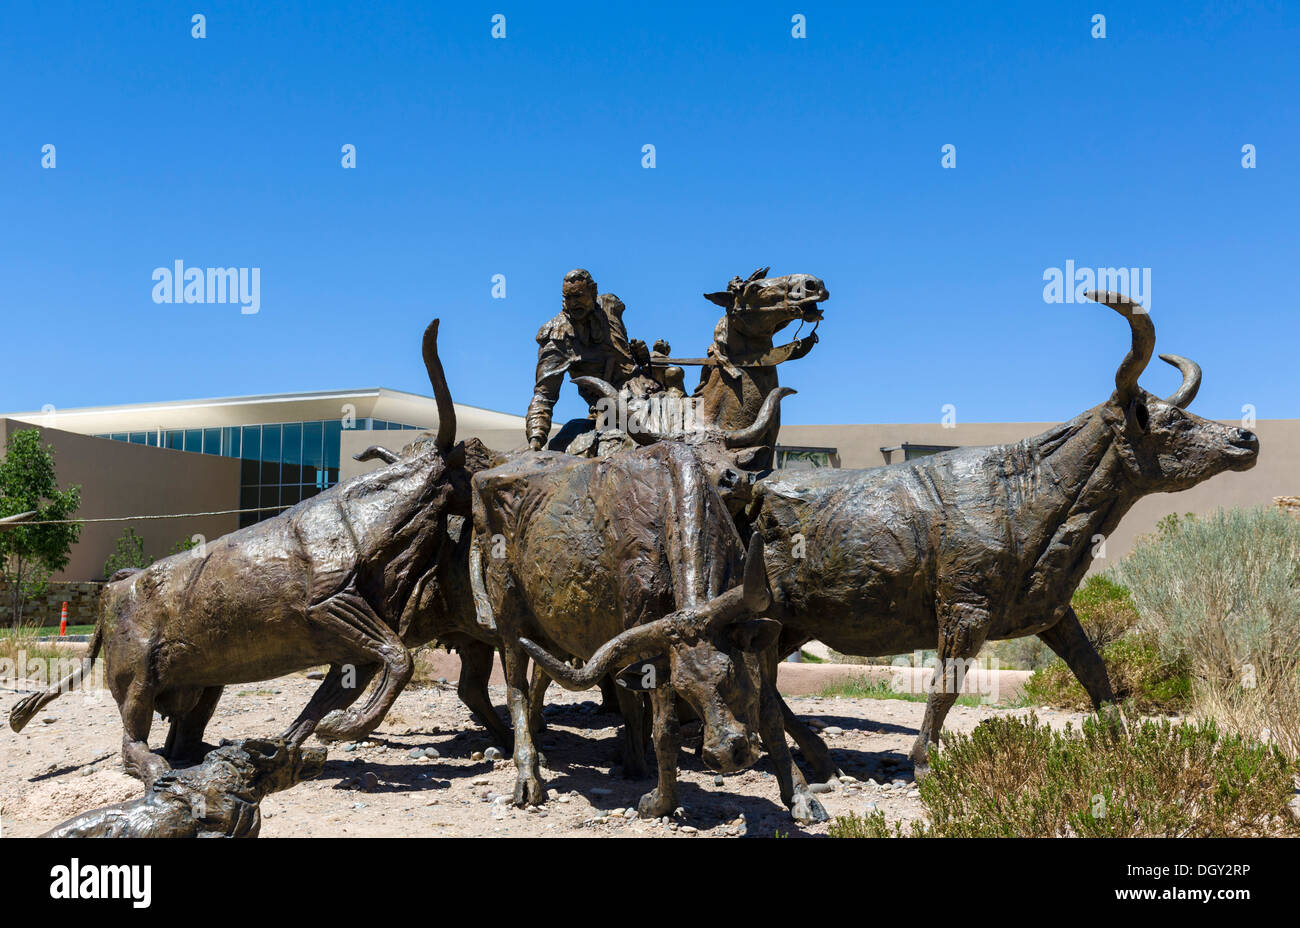 Sculptures outside the Albuquerque Museum of Art and History, Albuquerque, New Mexico, USA Stock Photo